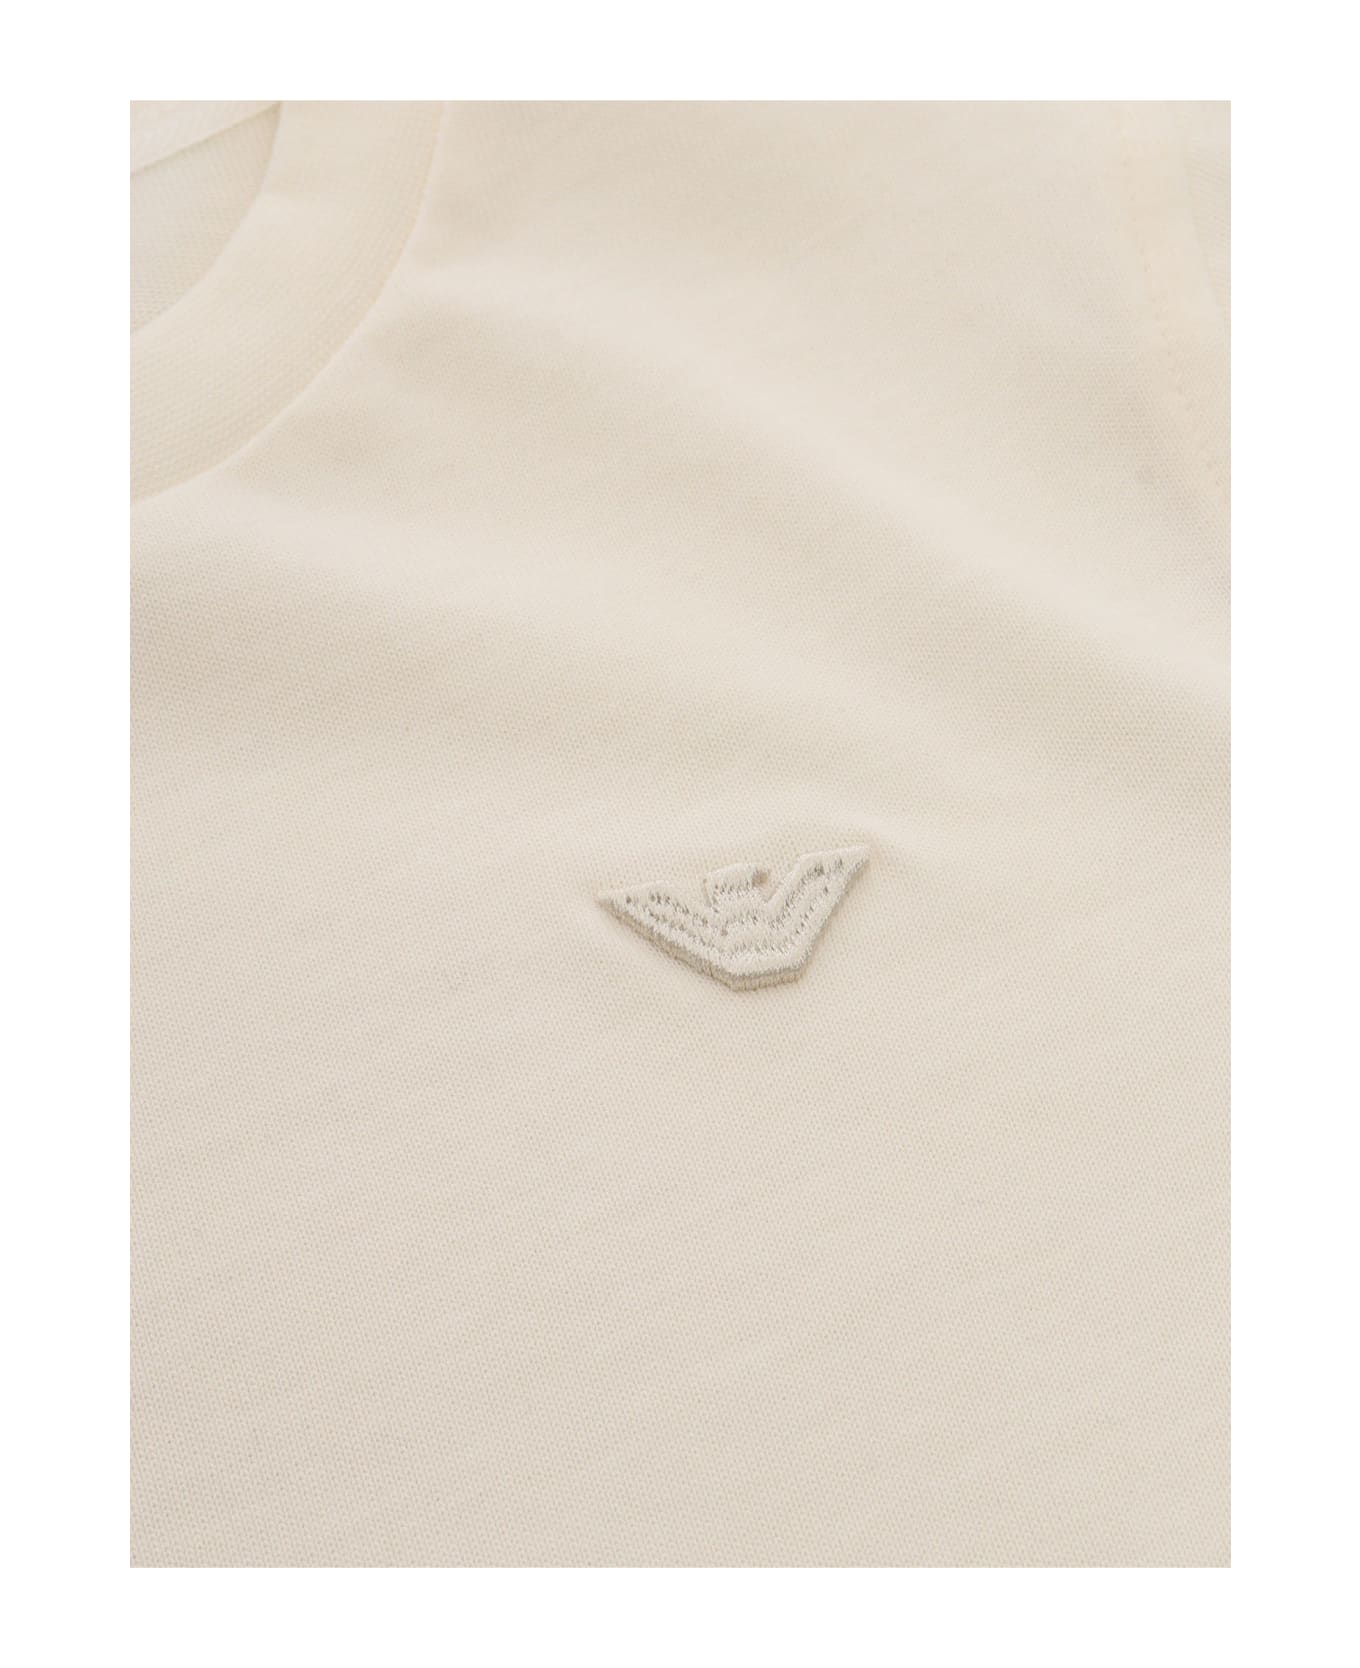 Emporio Armani Cream T-shirt With Logo - WHITE